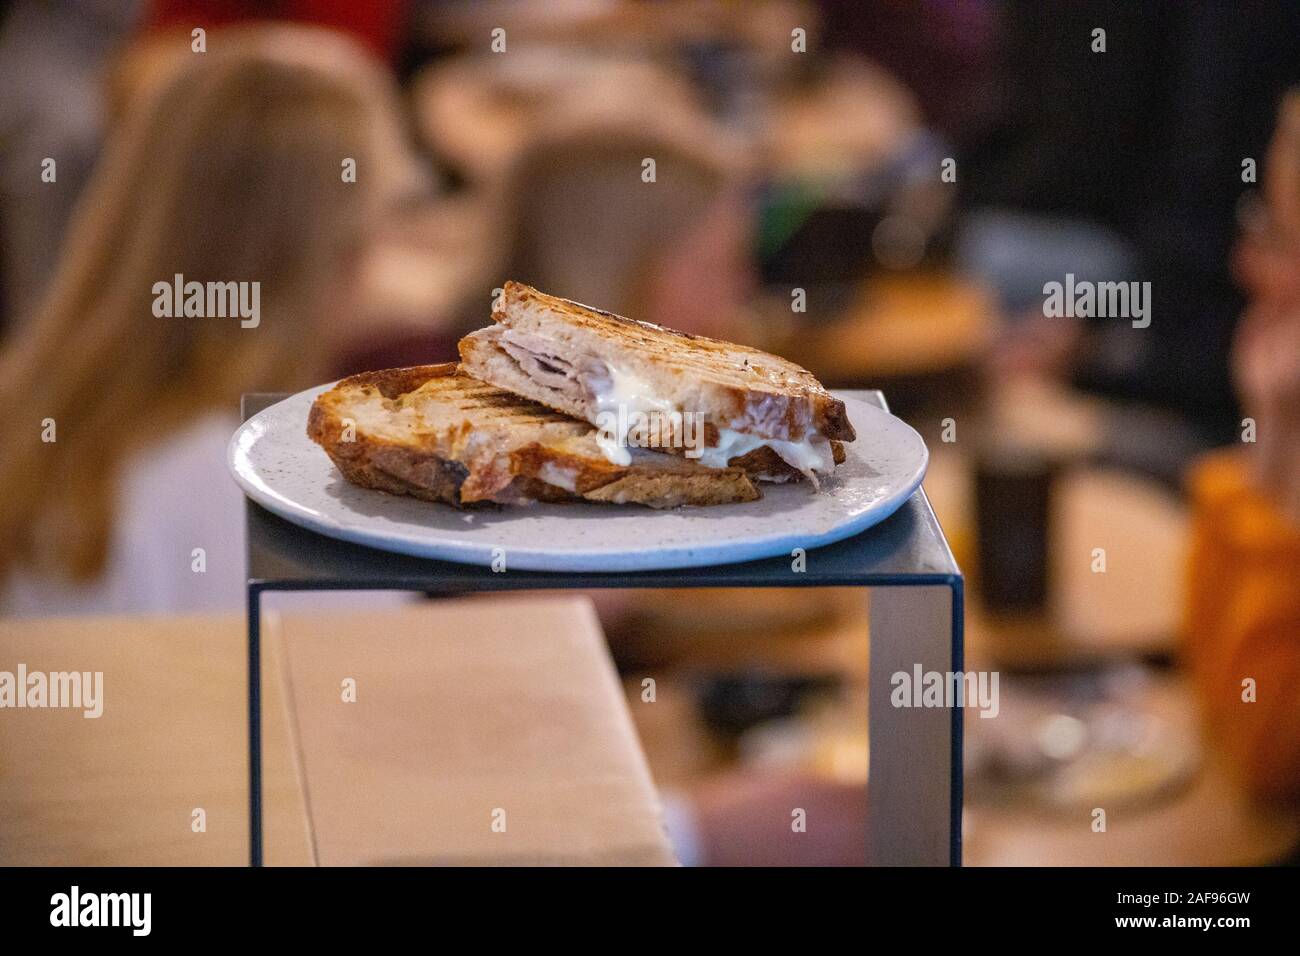 Sándwich mixto de jamón cocido a baja temperatura casero y queso pasiego, Pork and cheese panini at Mision Cafe, Madrid, Spain Stock Photo